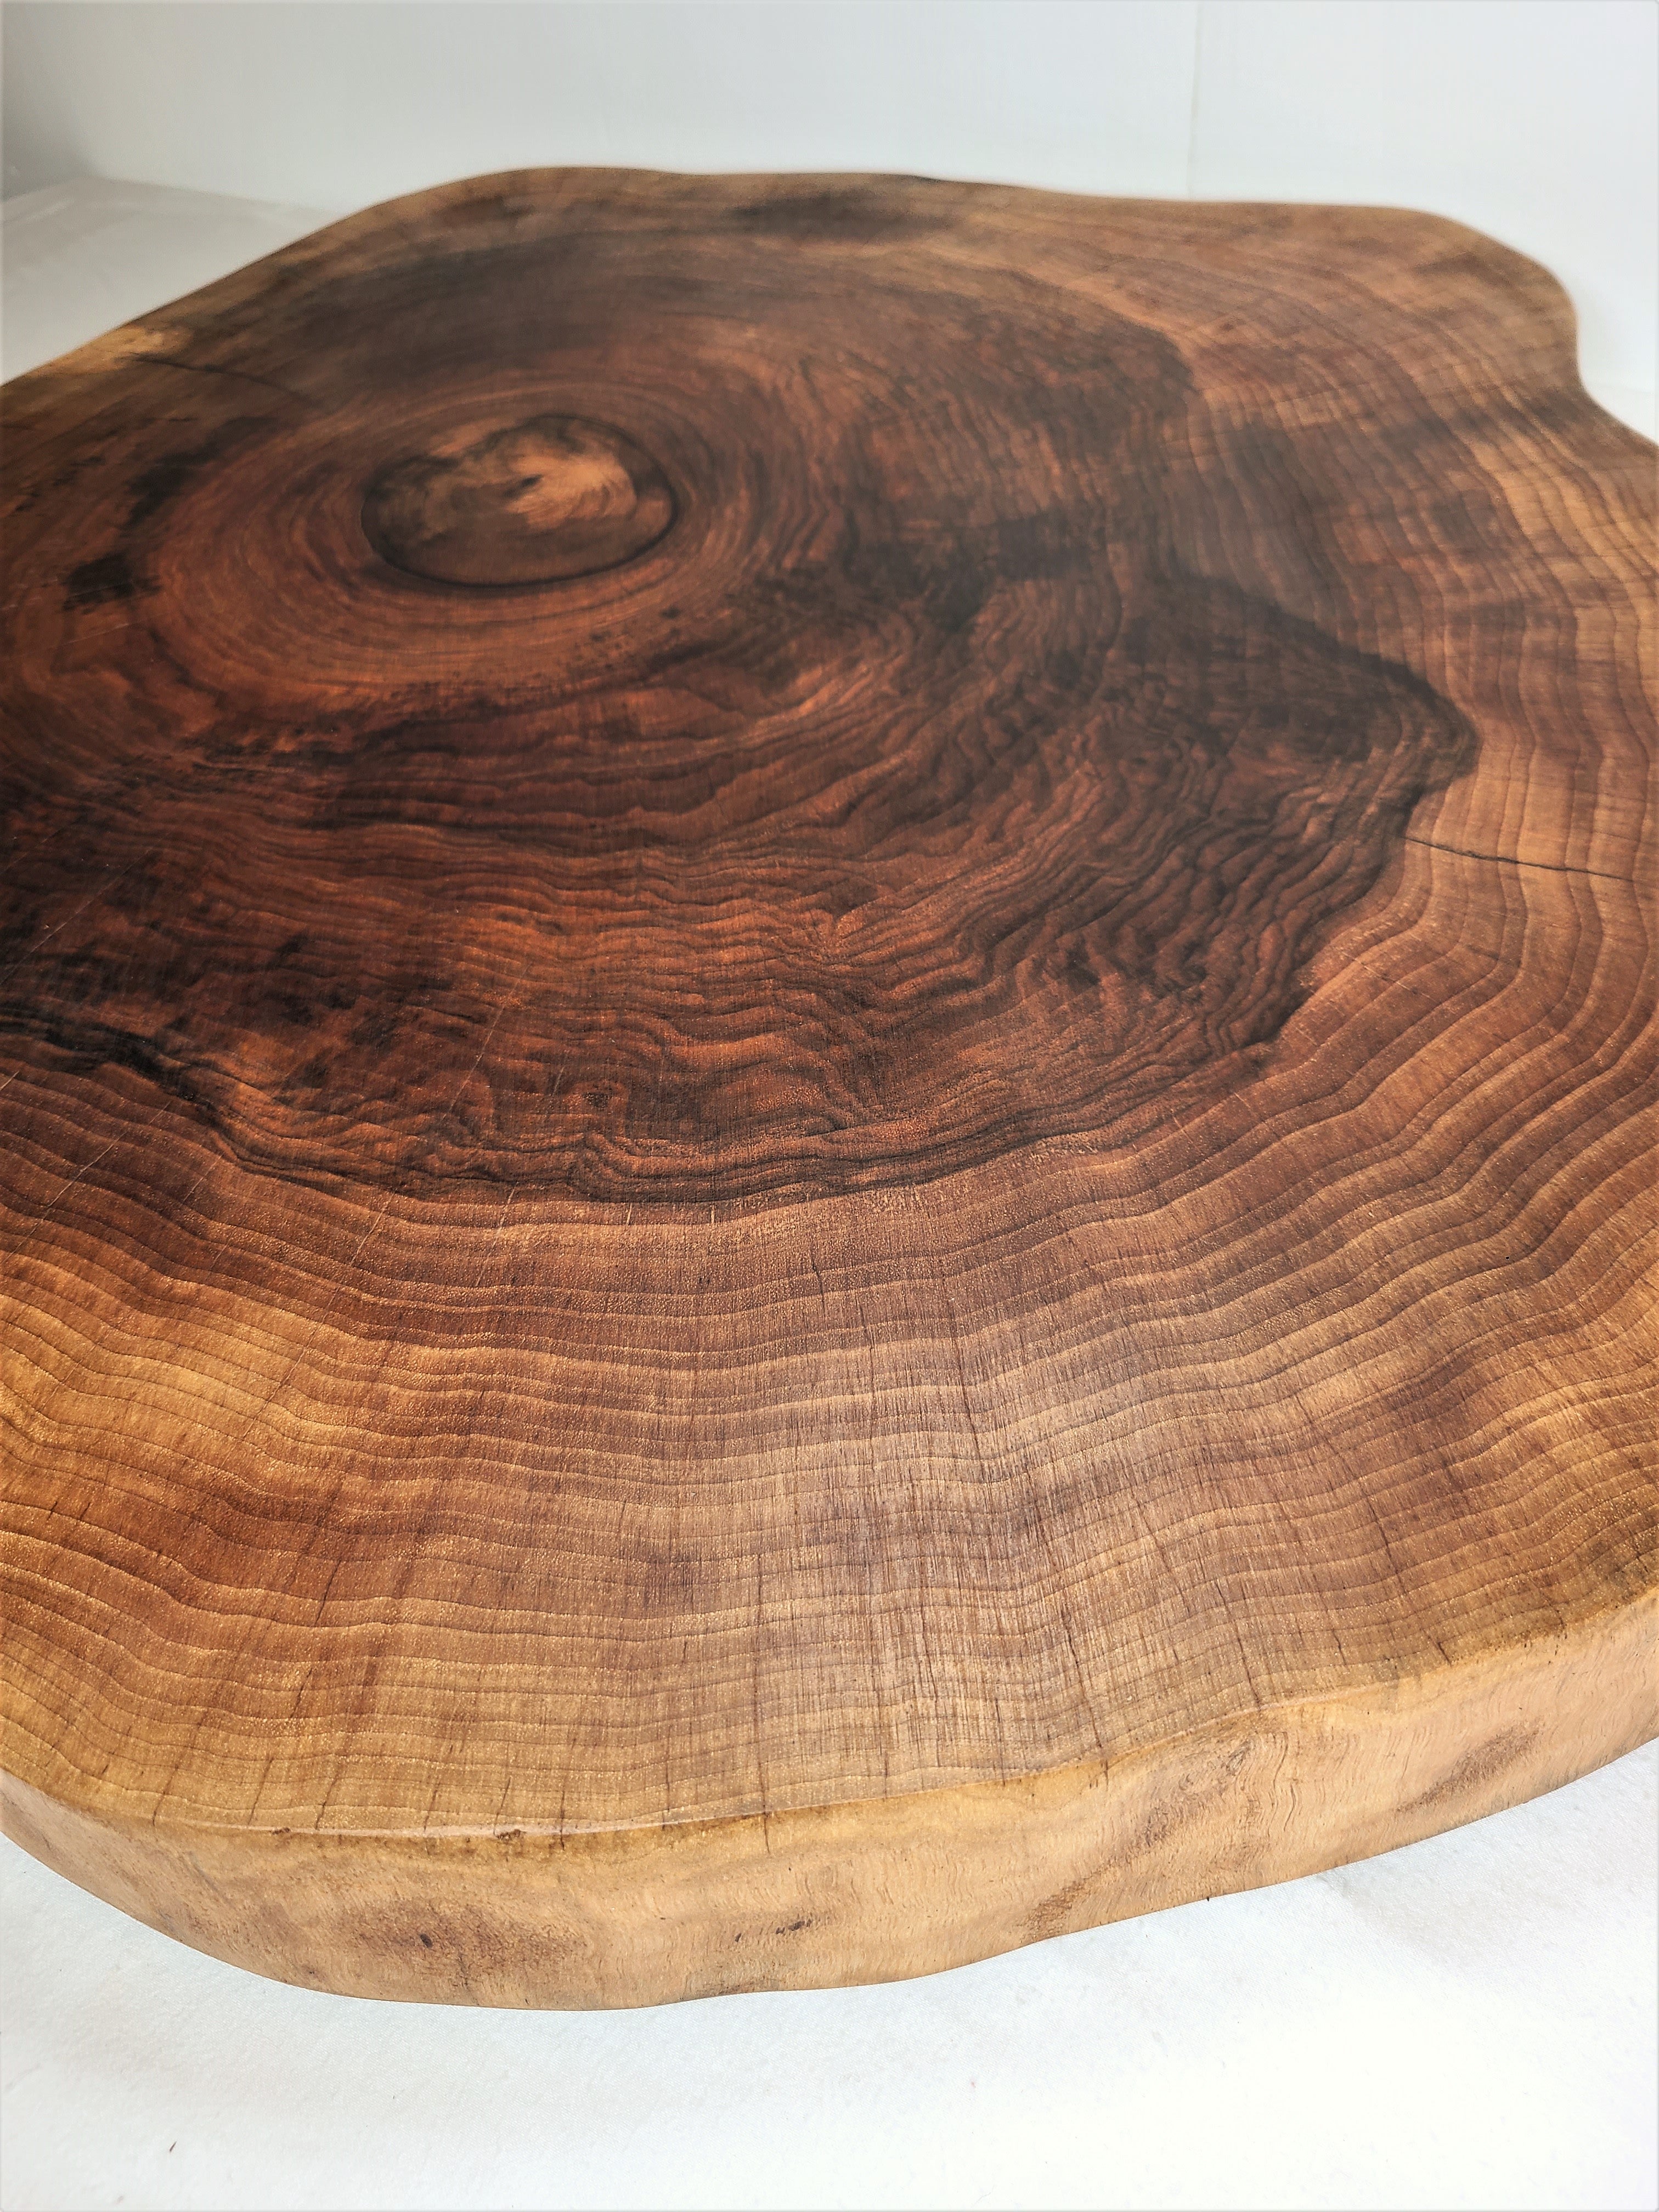 English Walnut "Cross-Cut" Charcuterie/Grazing/ Wood Cutting Board